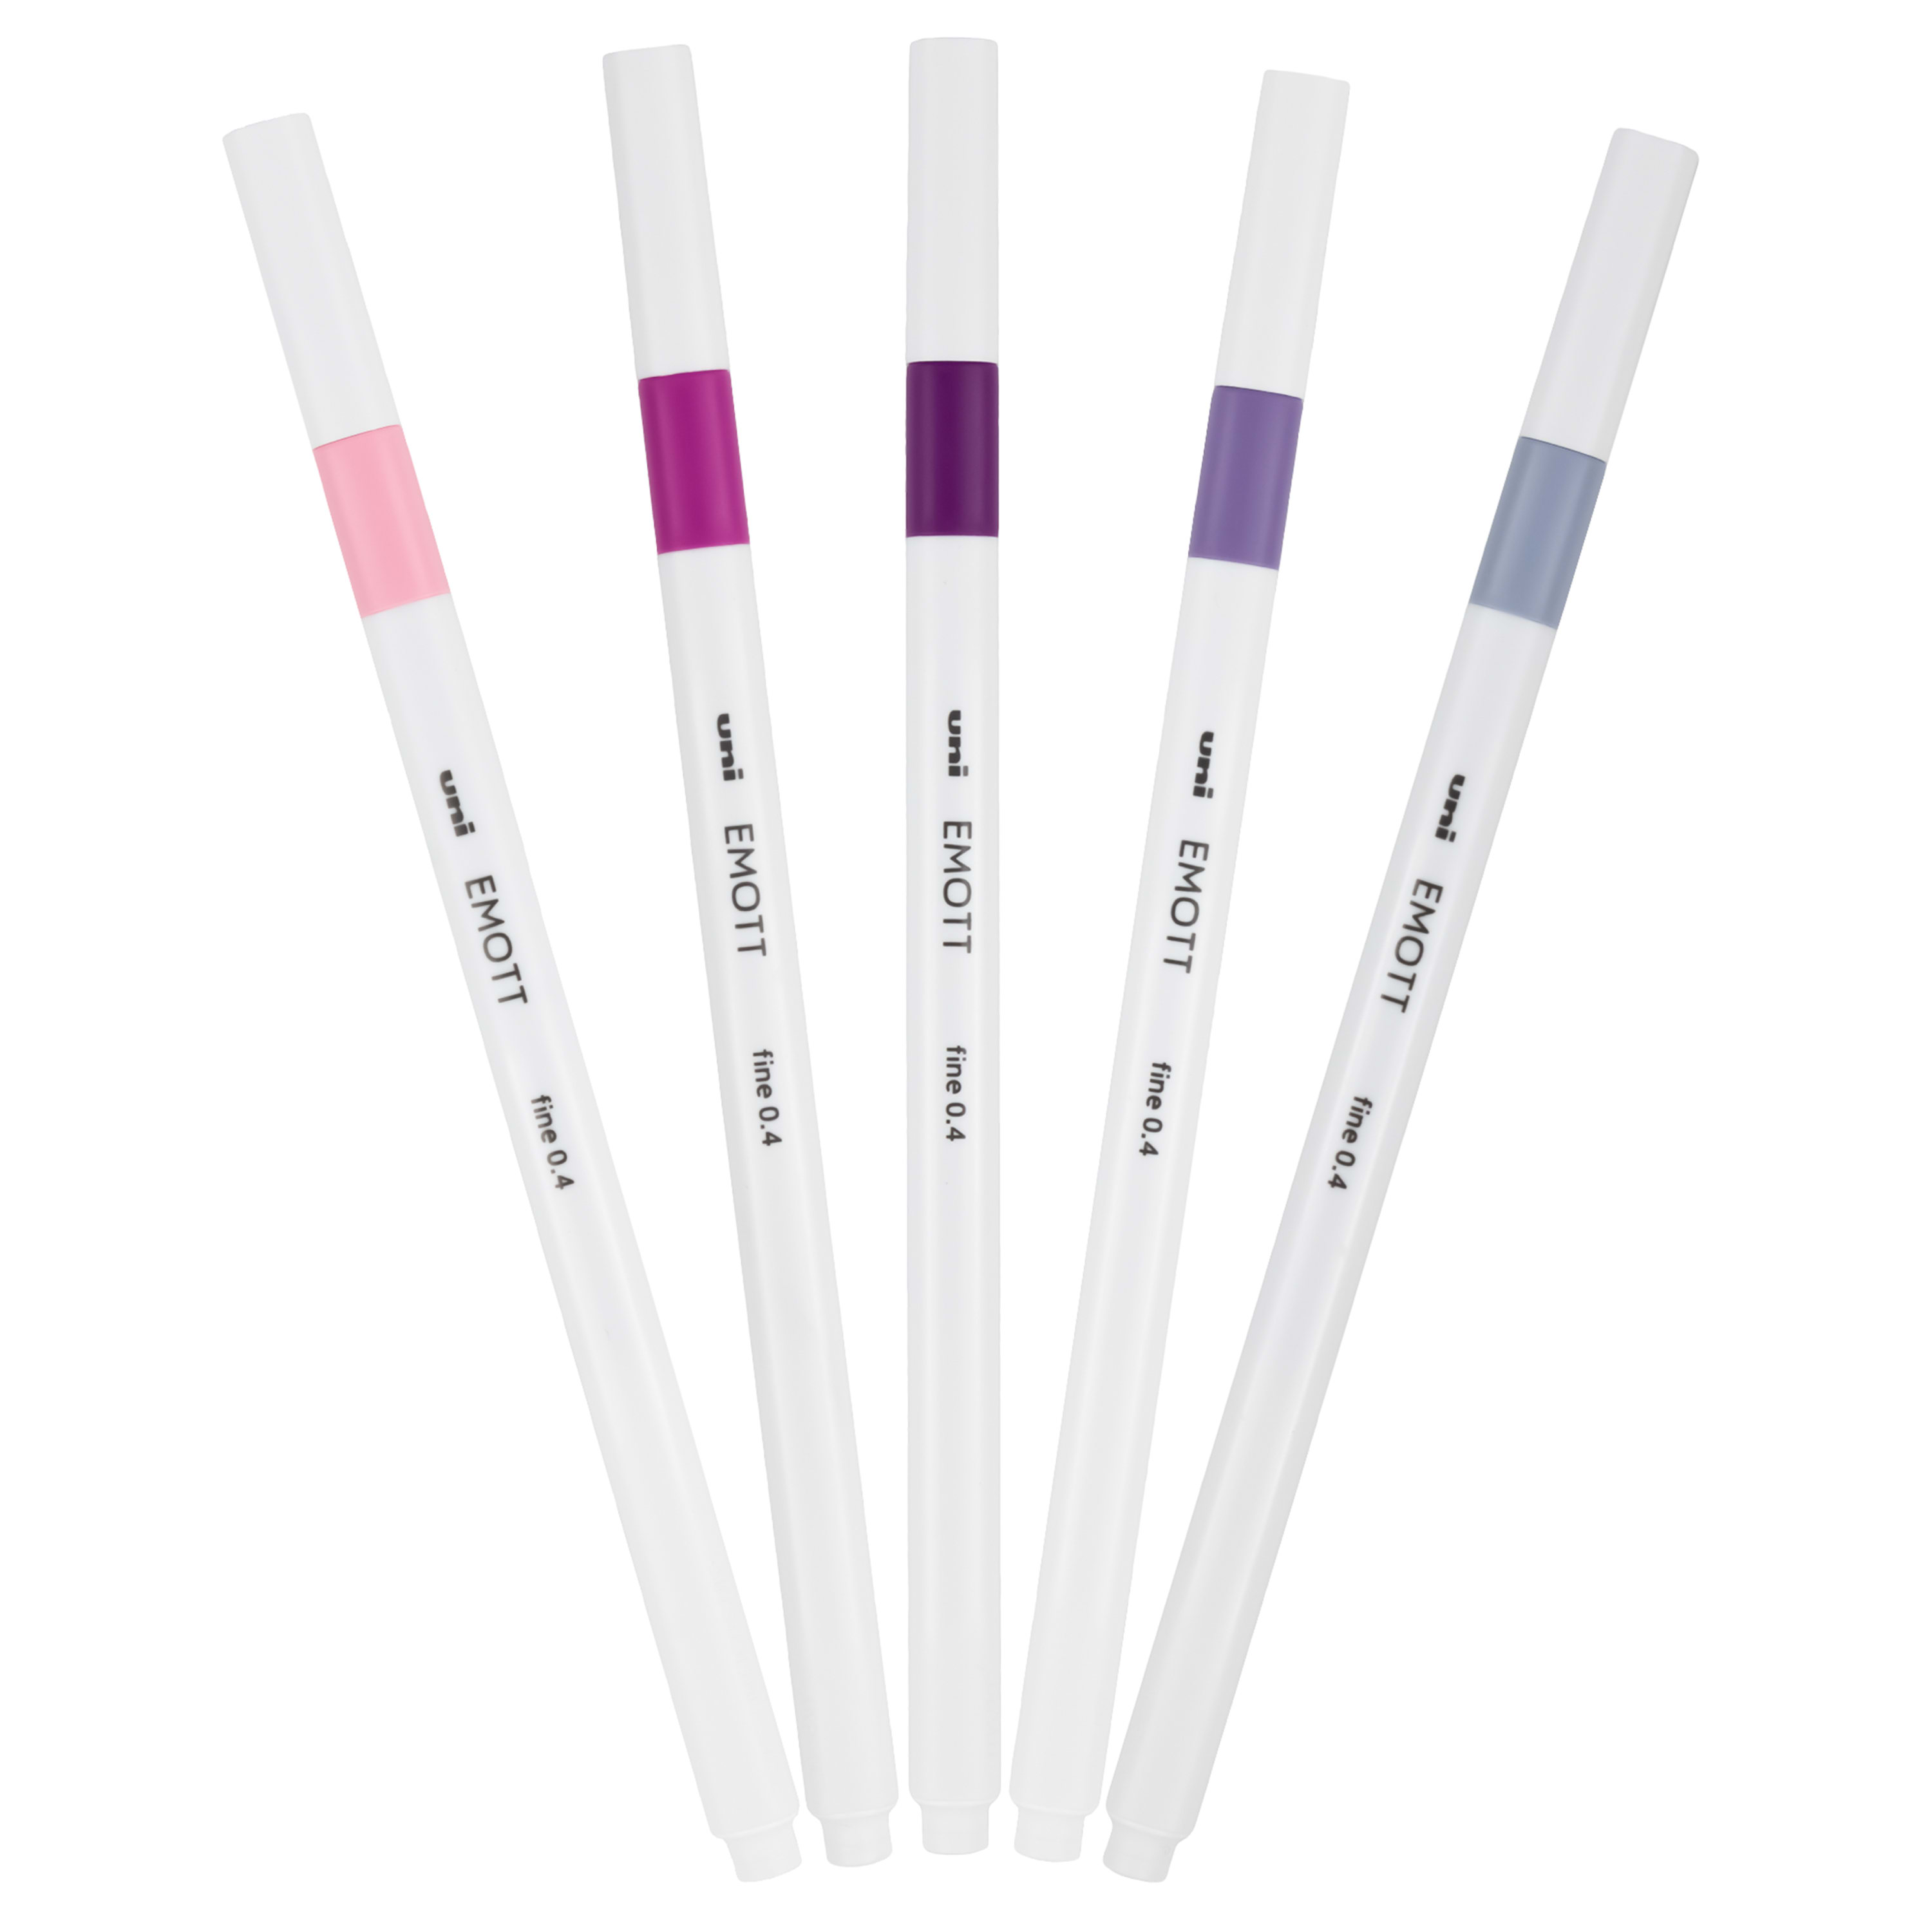 Uniball EMOTT Fine Line Marker Pens, Fine Point (0.4mm), Floral Colors, 5 Count - image 5 of 12